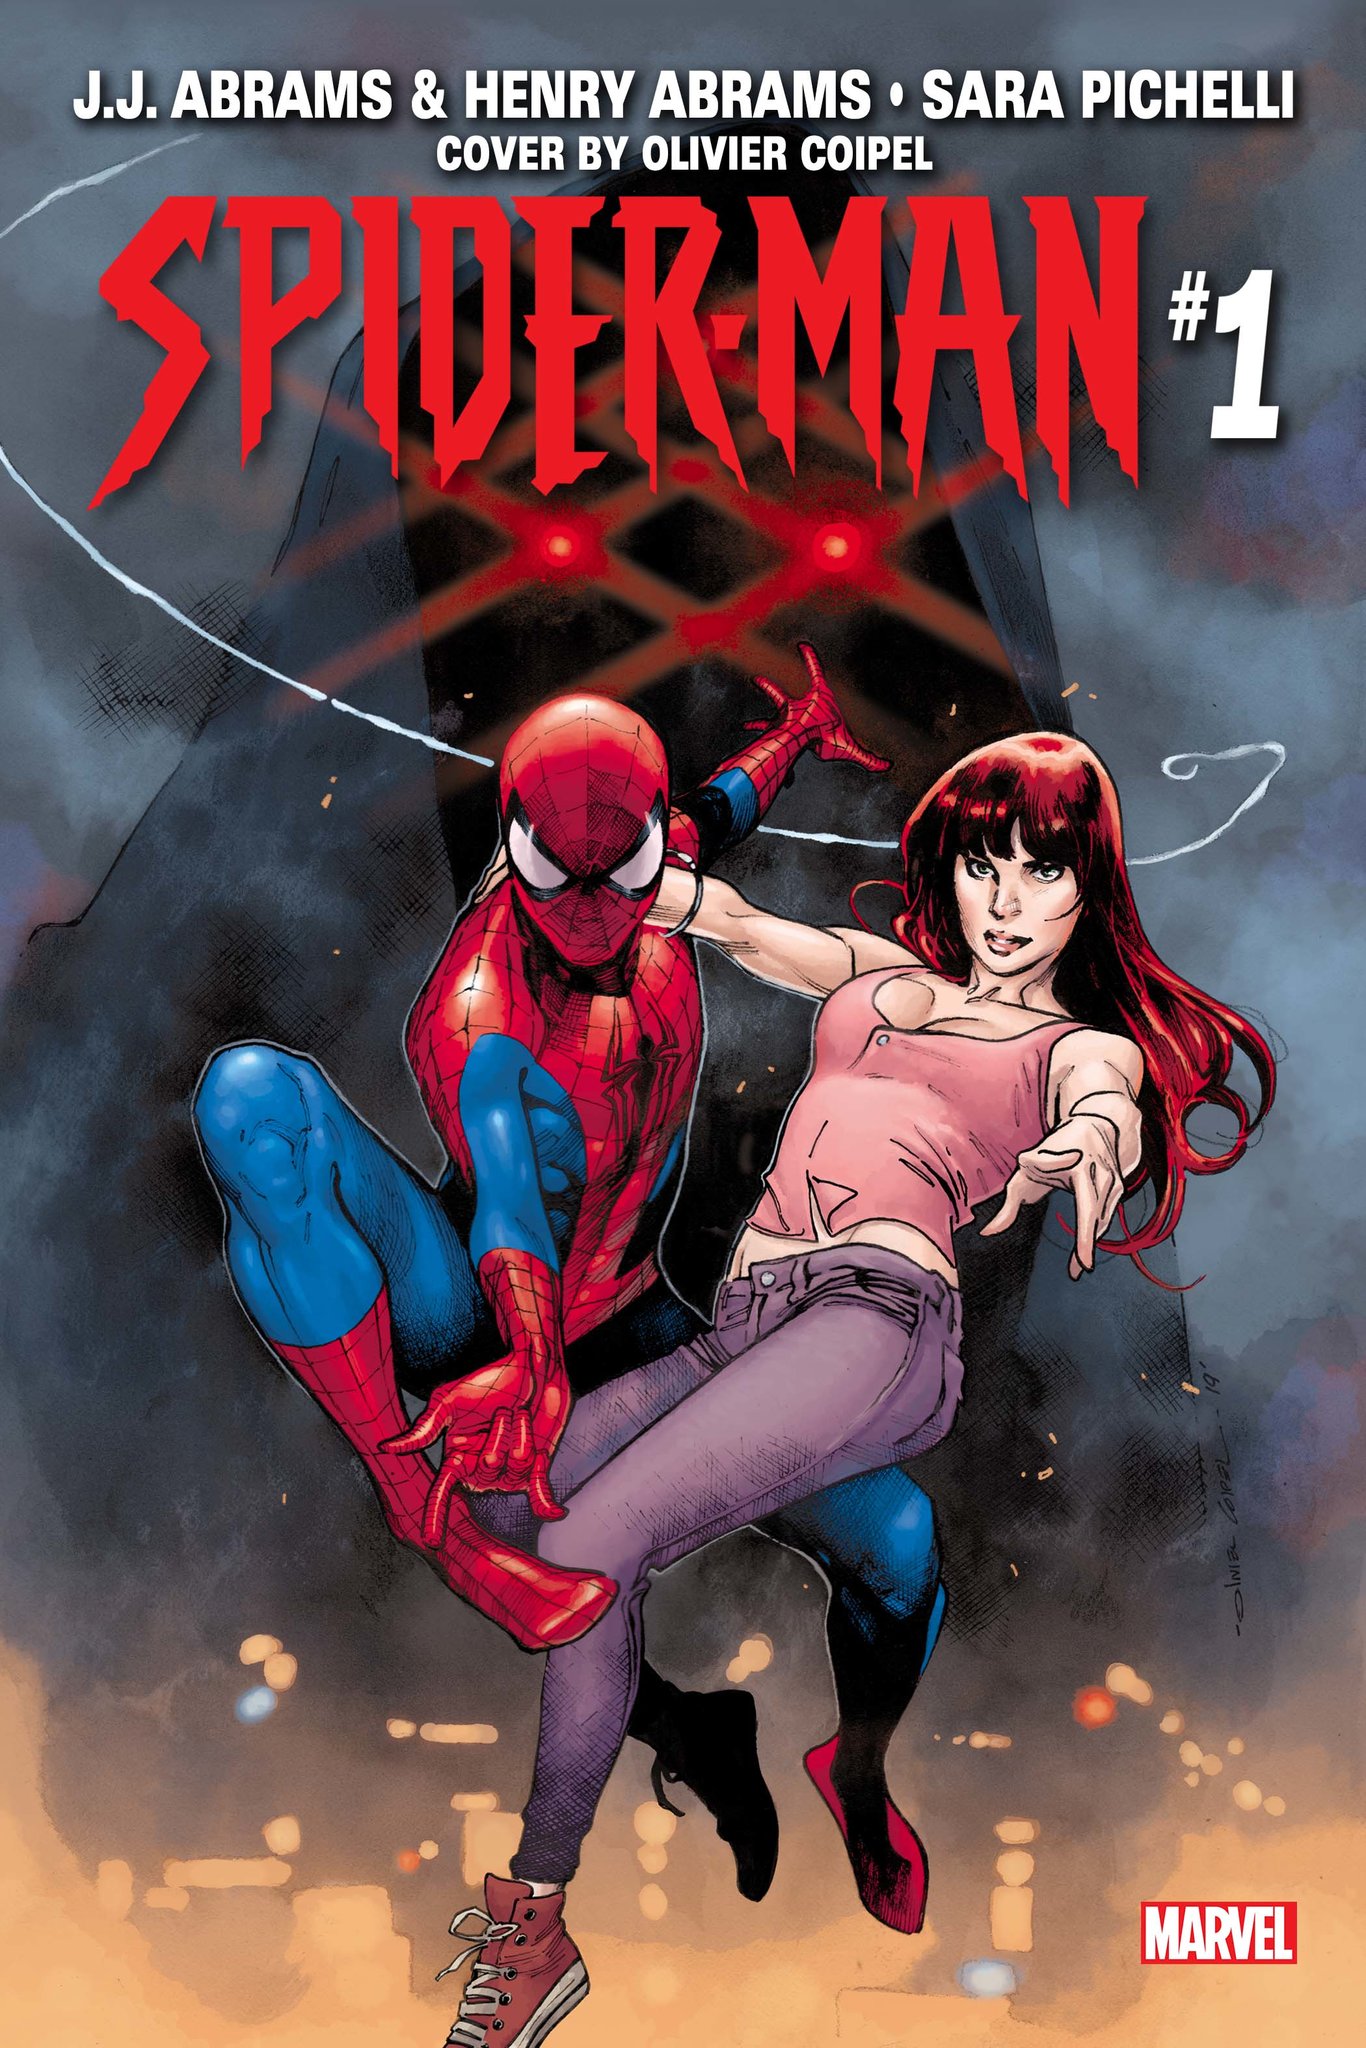 MARVEL COMICS [News]: J.J. Abrams & Son Debut With Spider-Man #1!